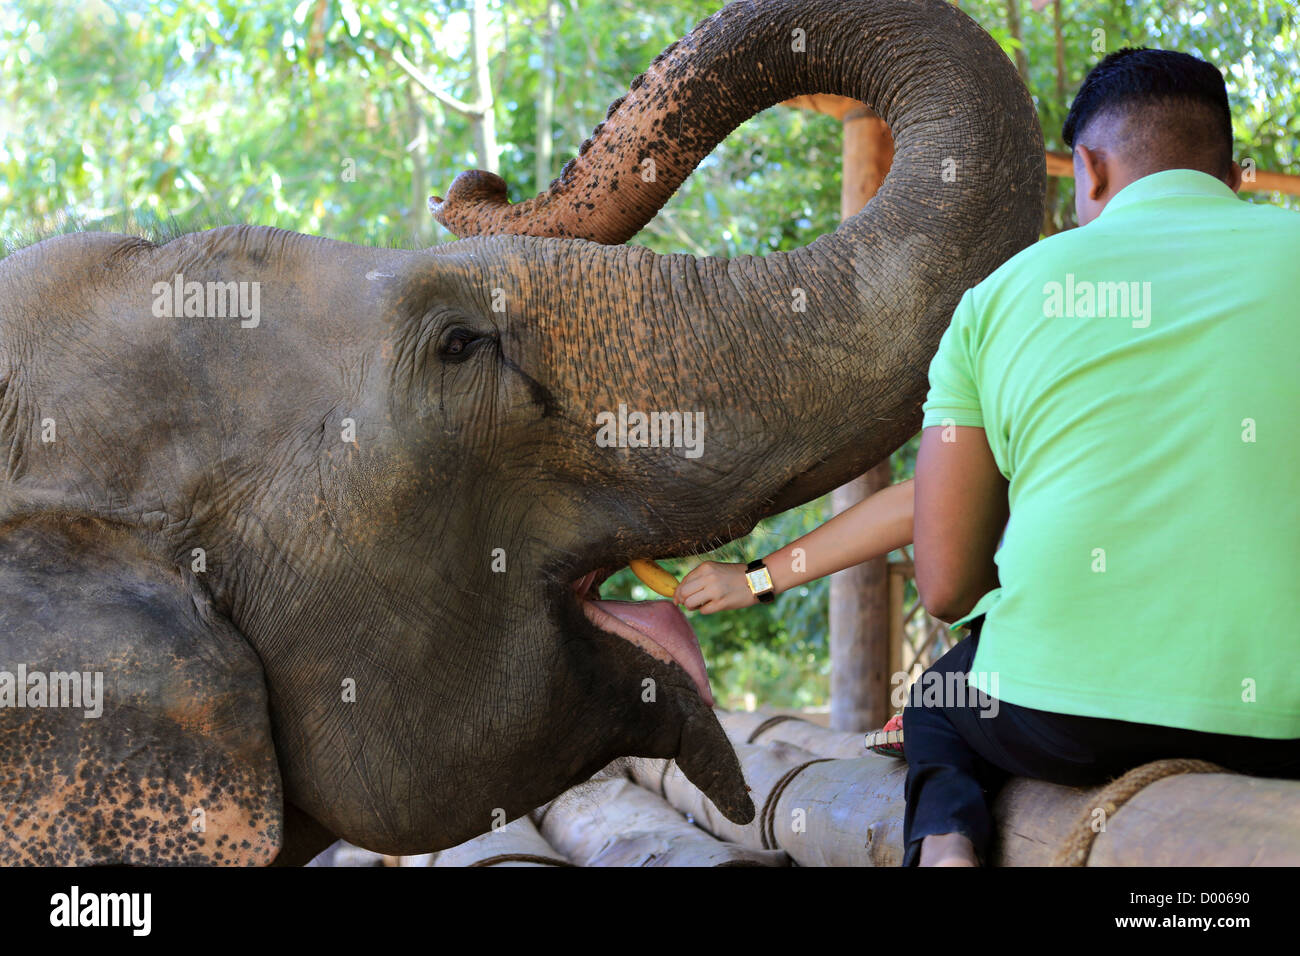 Tourist feeds an elephant at Pinnawala elephant orphanage in Sri Lanka. Stock Photo